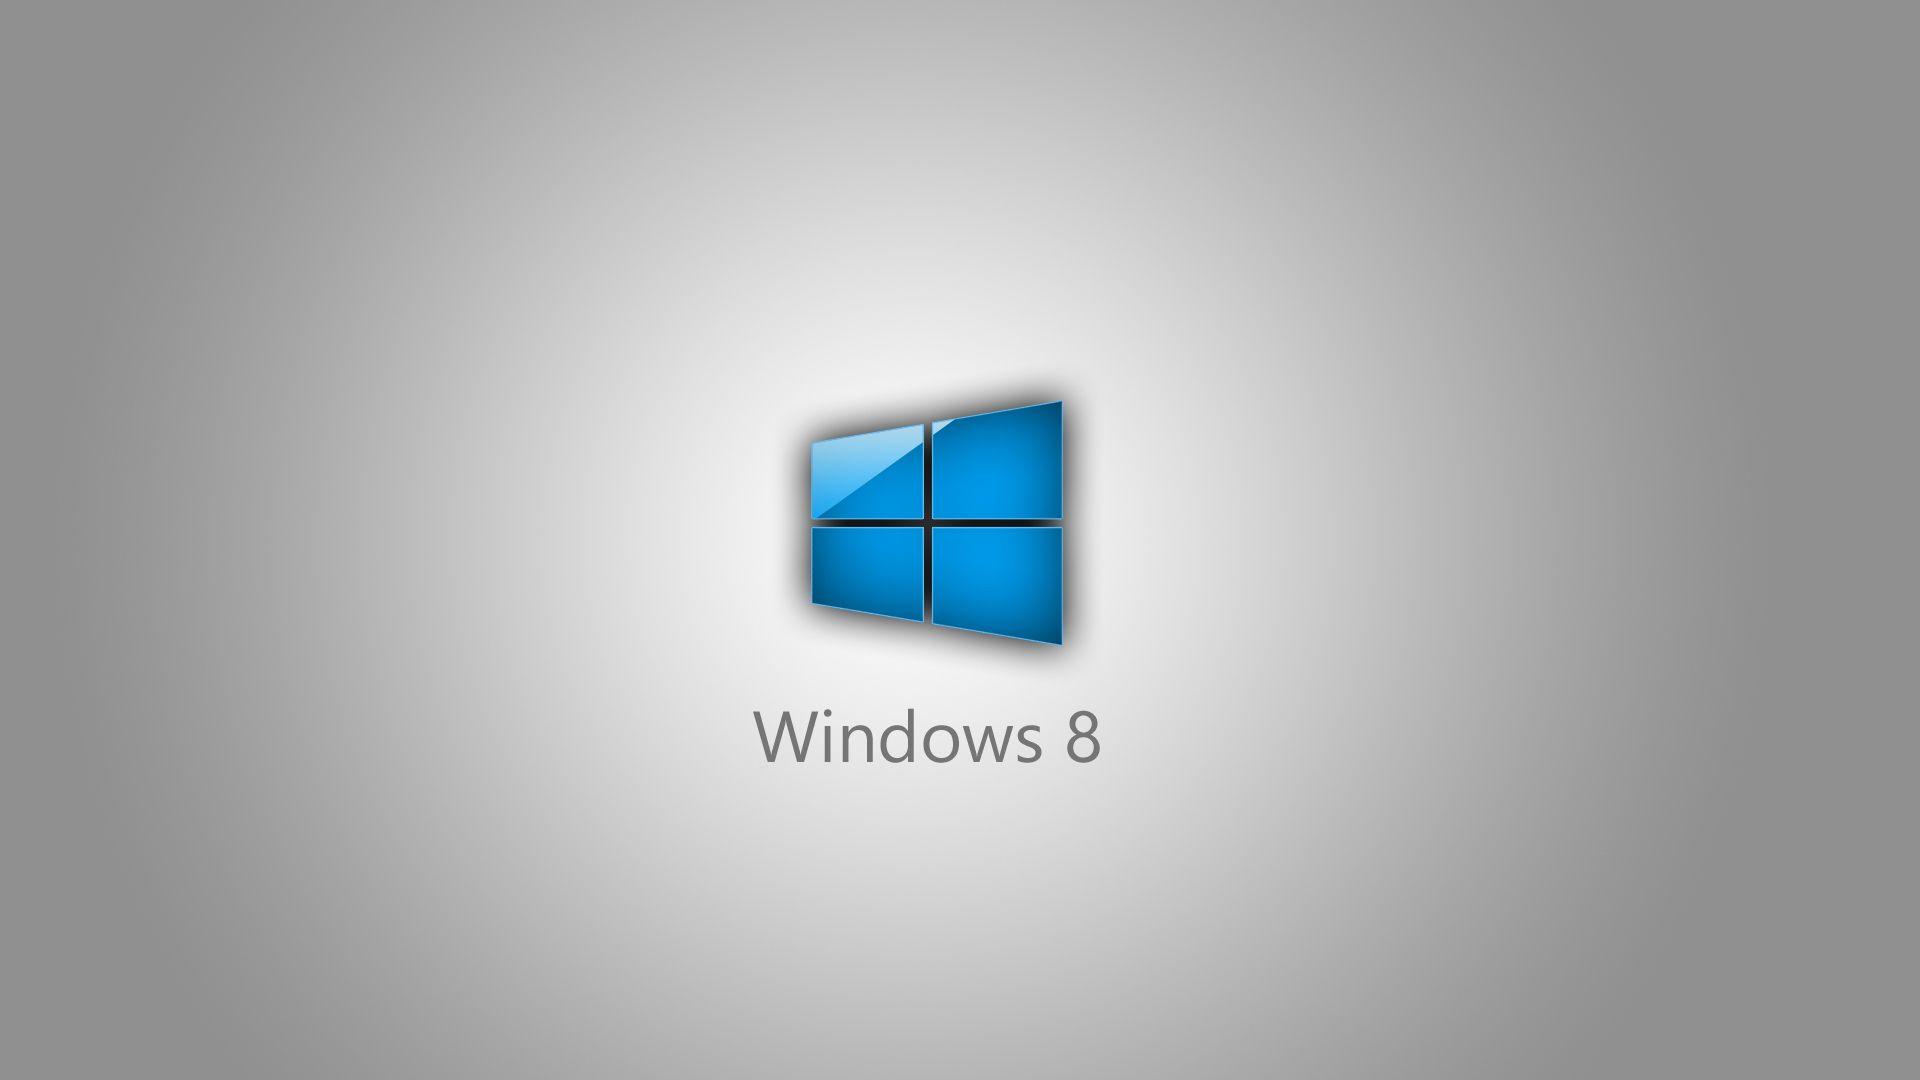 Windows 8 Wallpaper HD 21 Background. Wallruru